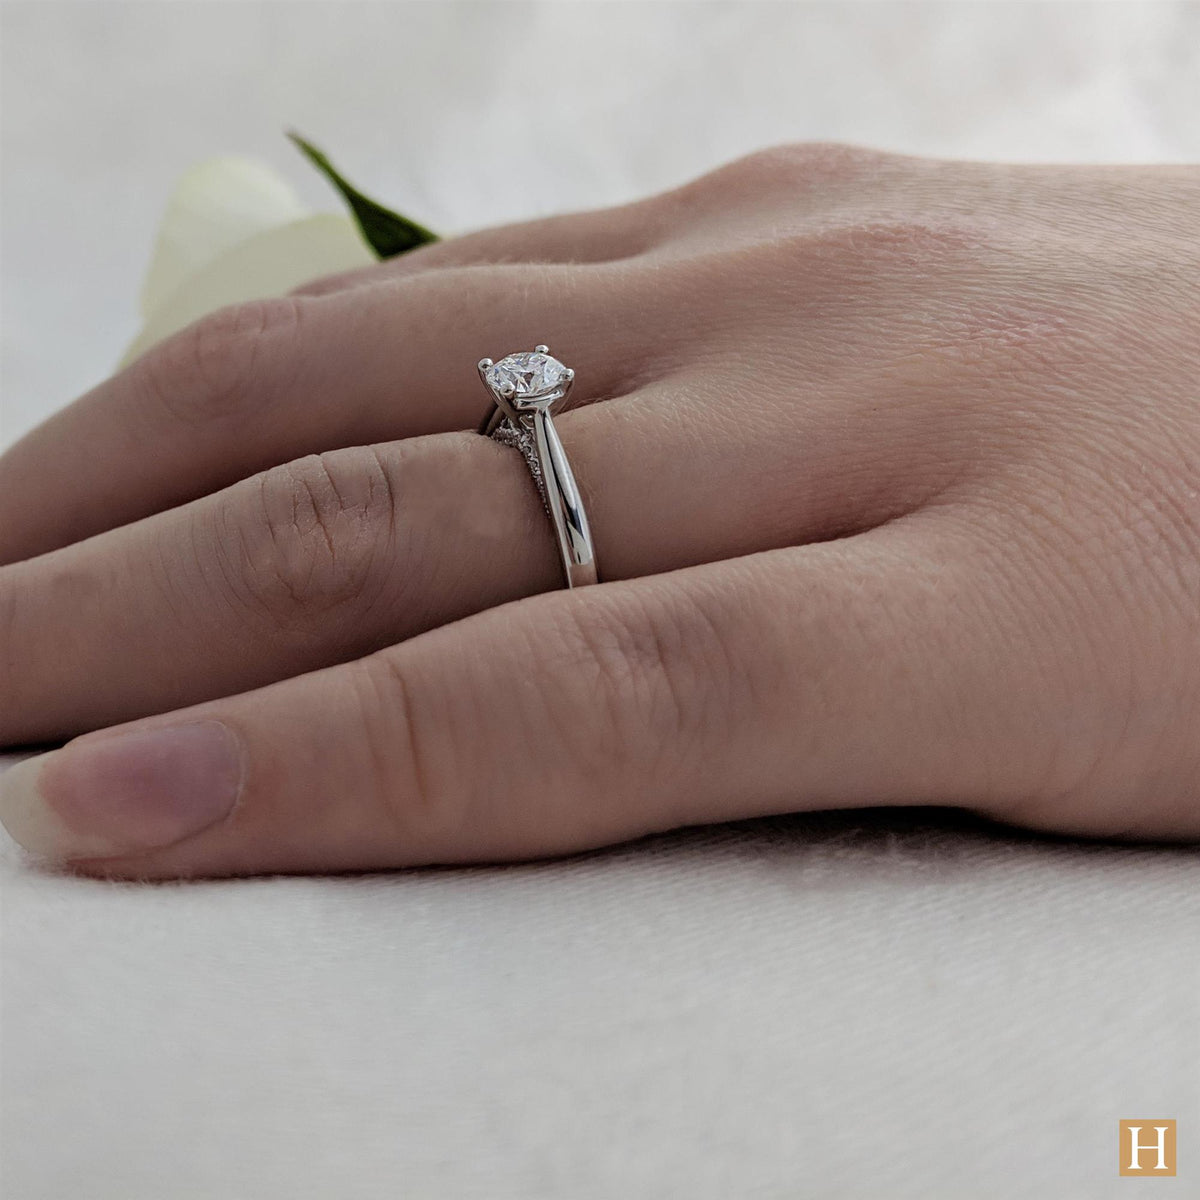 Platinum Oxford Engagement Ring